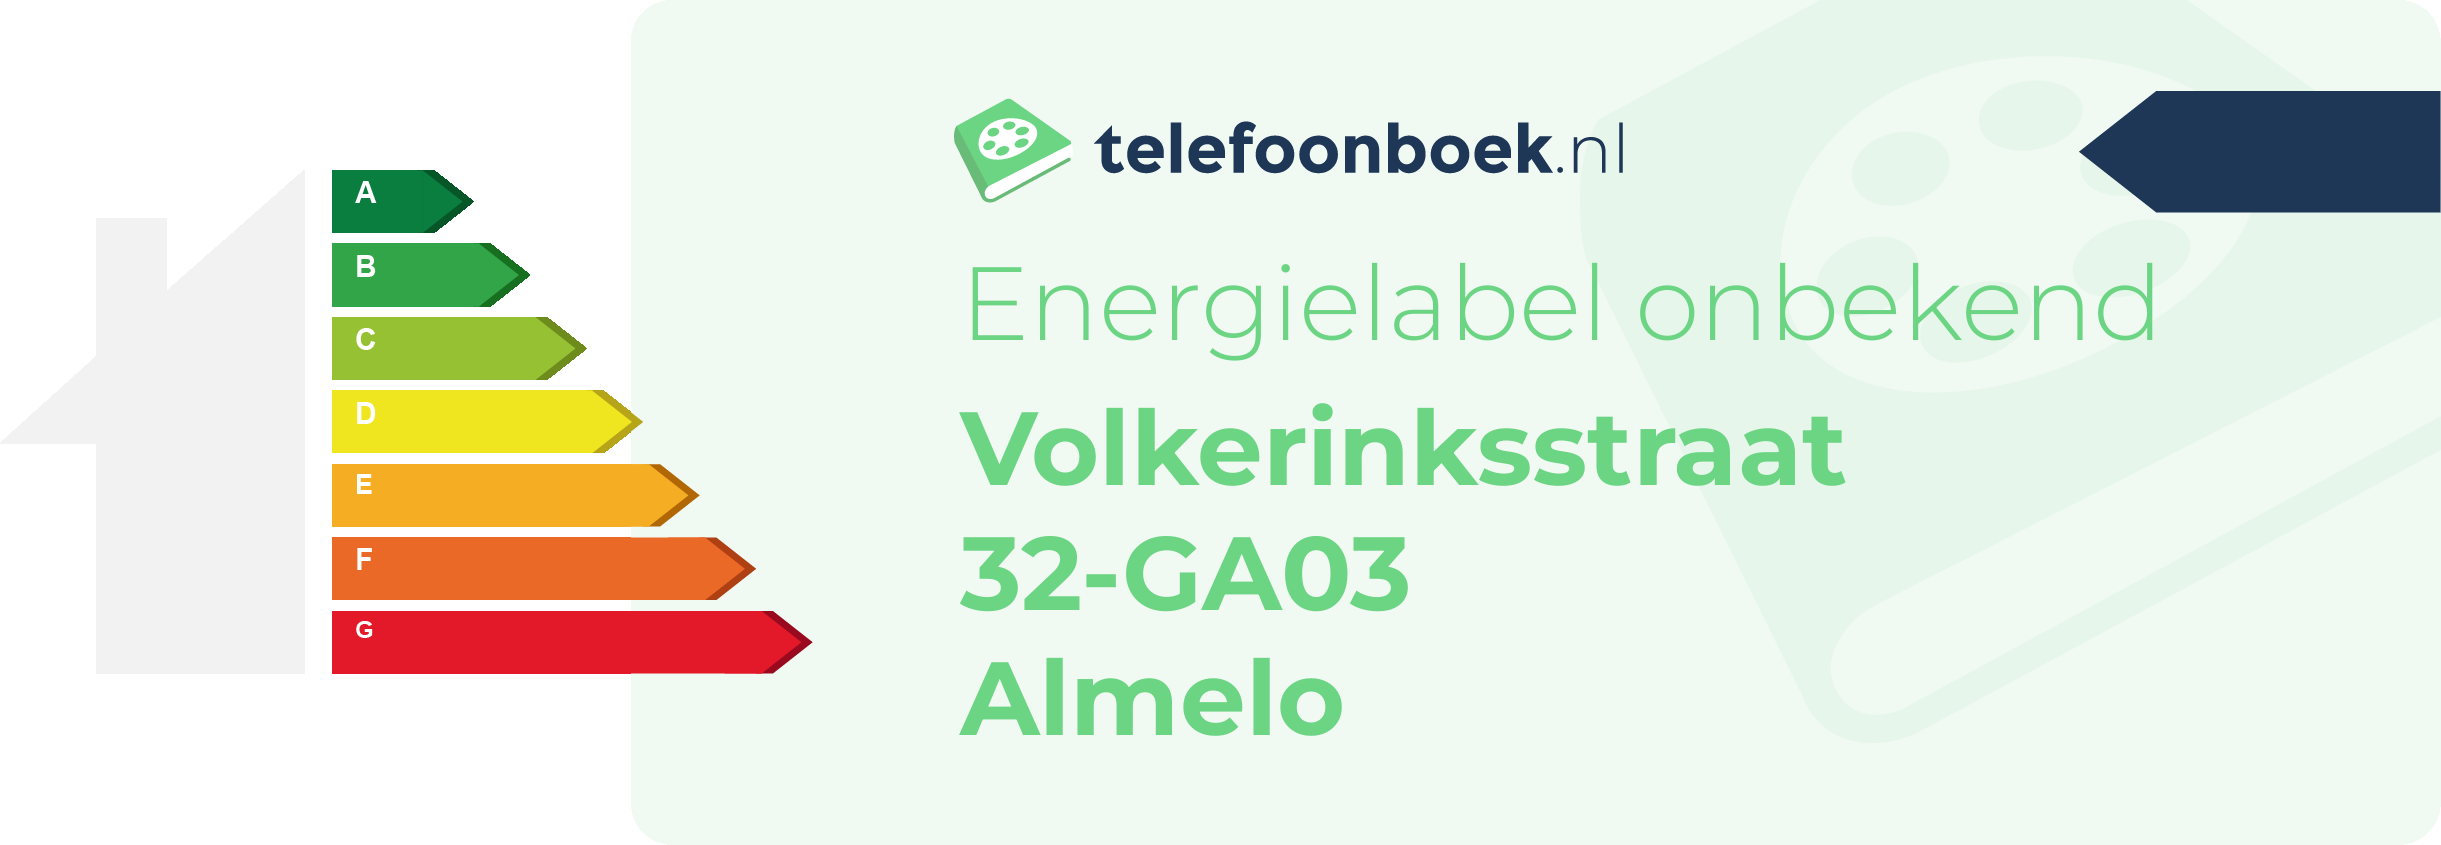 Energielabel Volkerinksstraat 32-GA03 Almelo